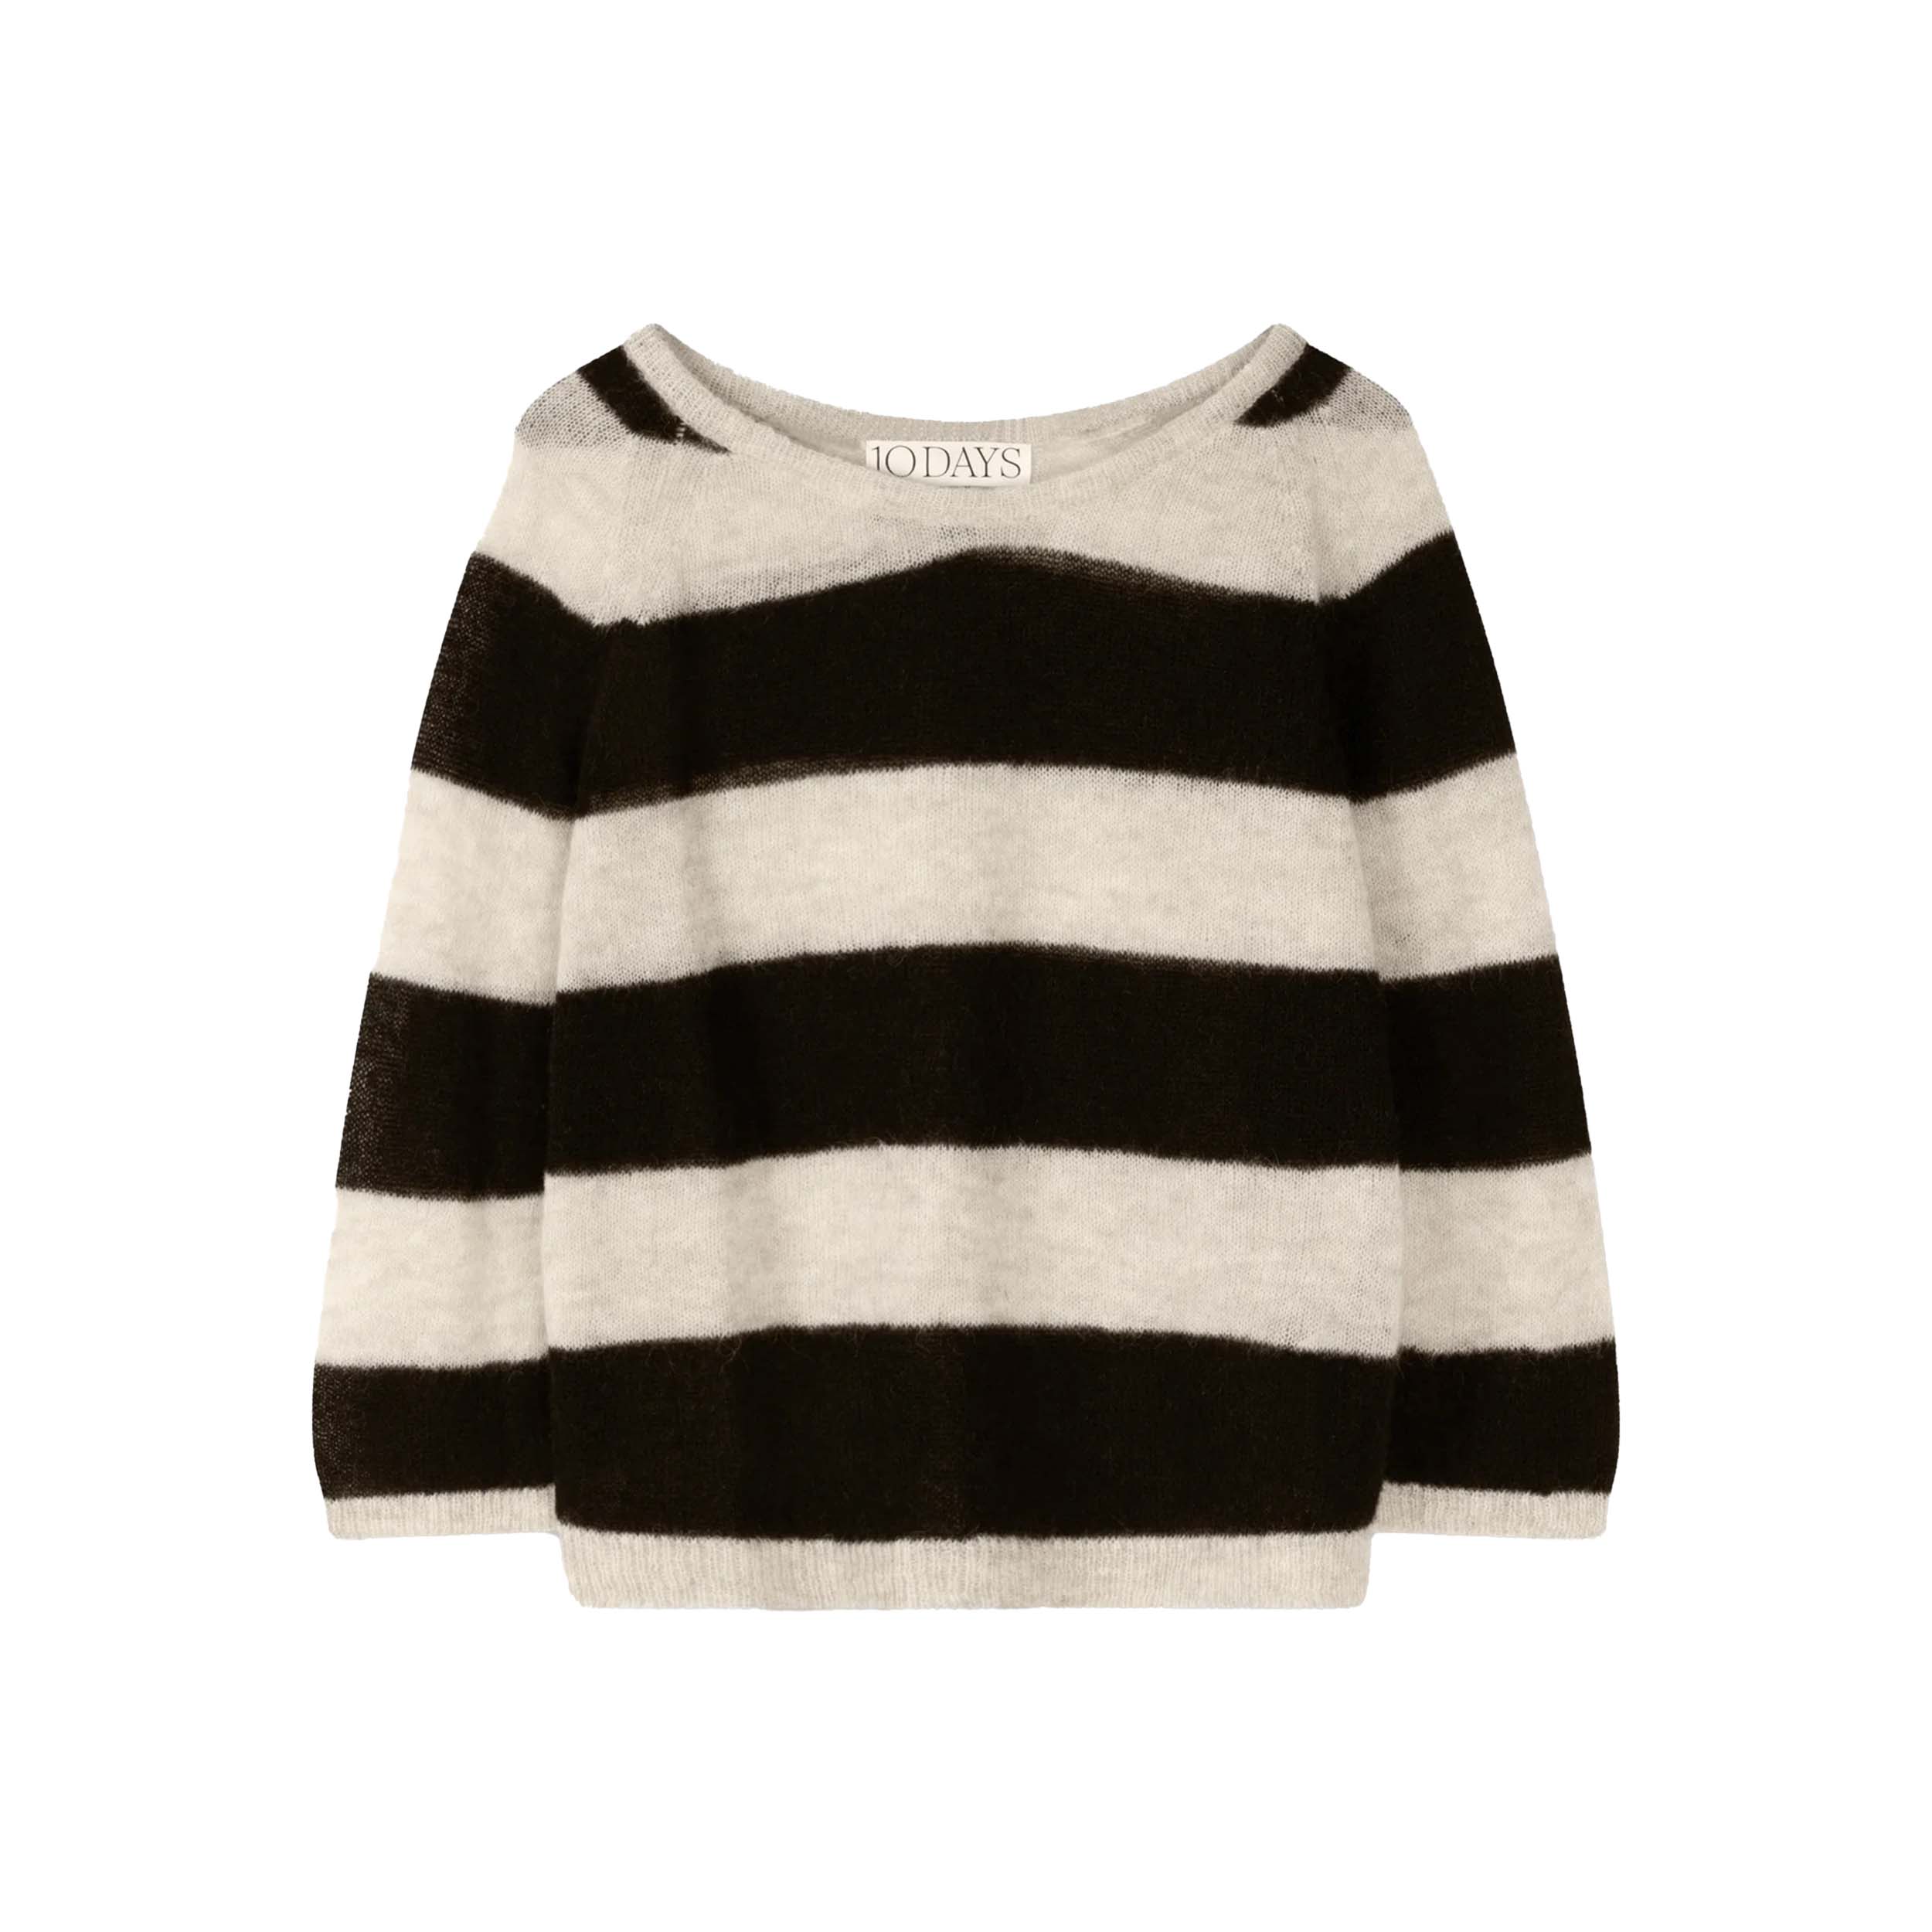 10DAYS Sweater Thin Knit Stripes Safari/Black